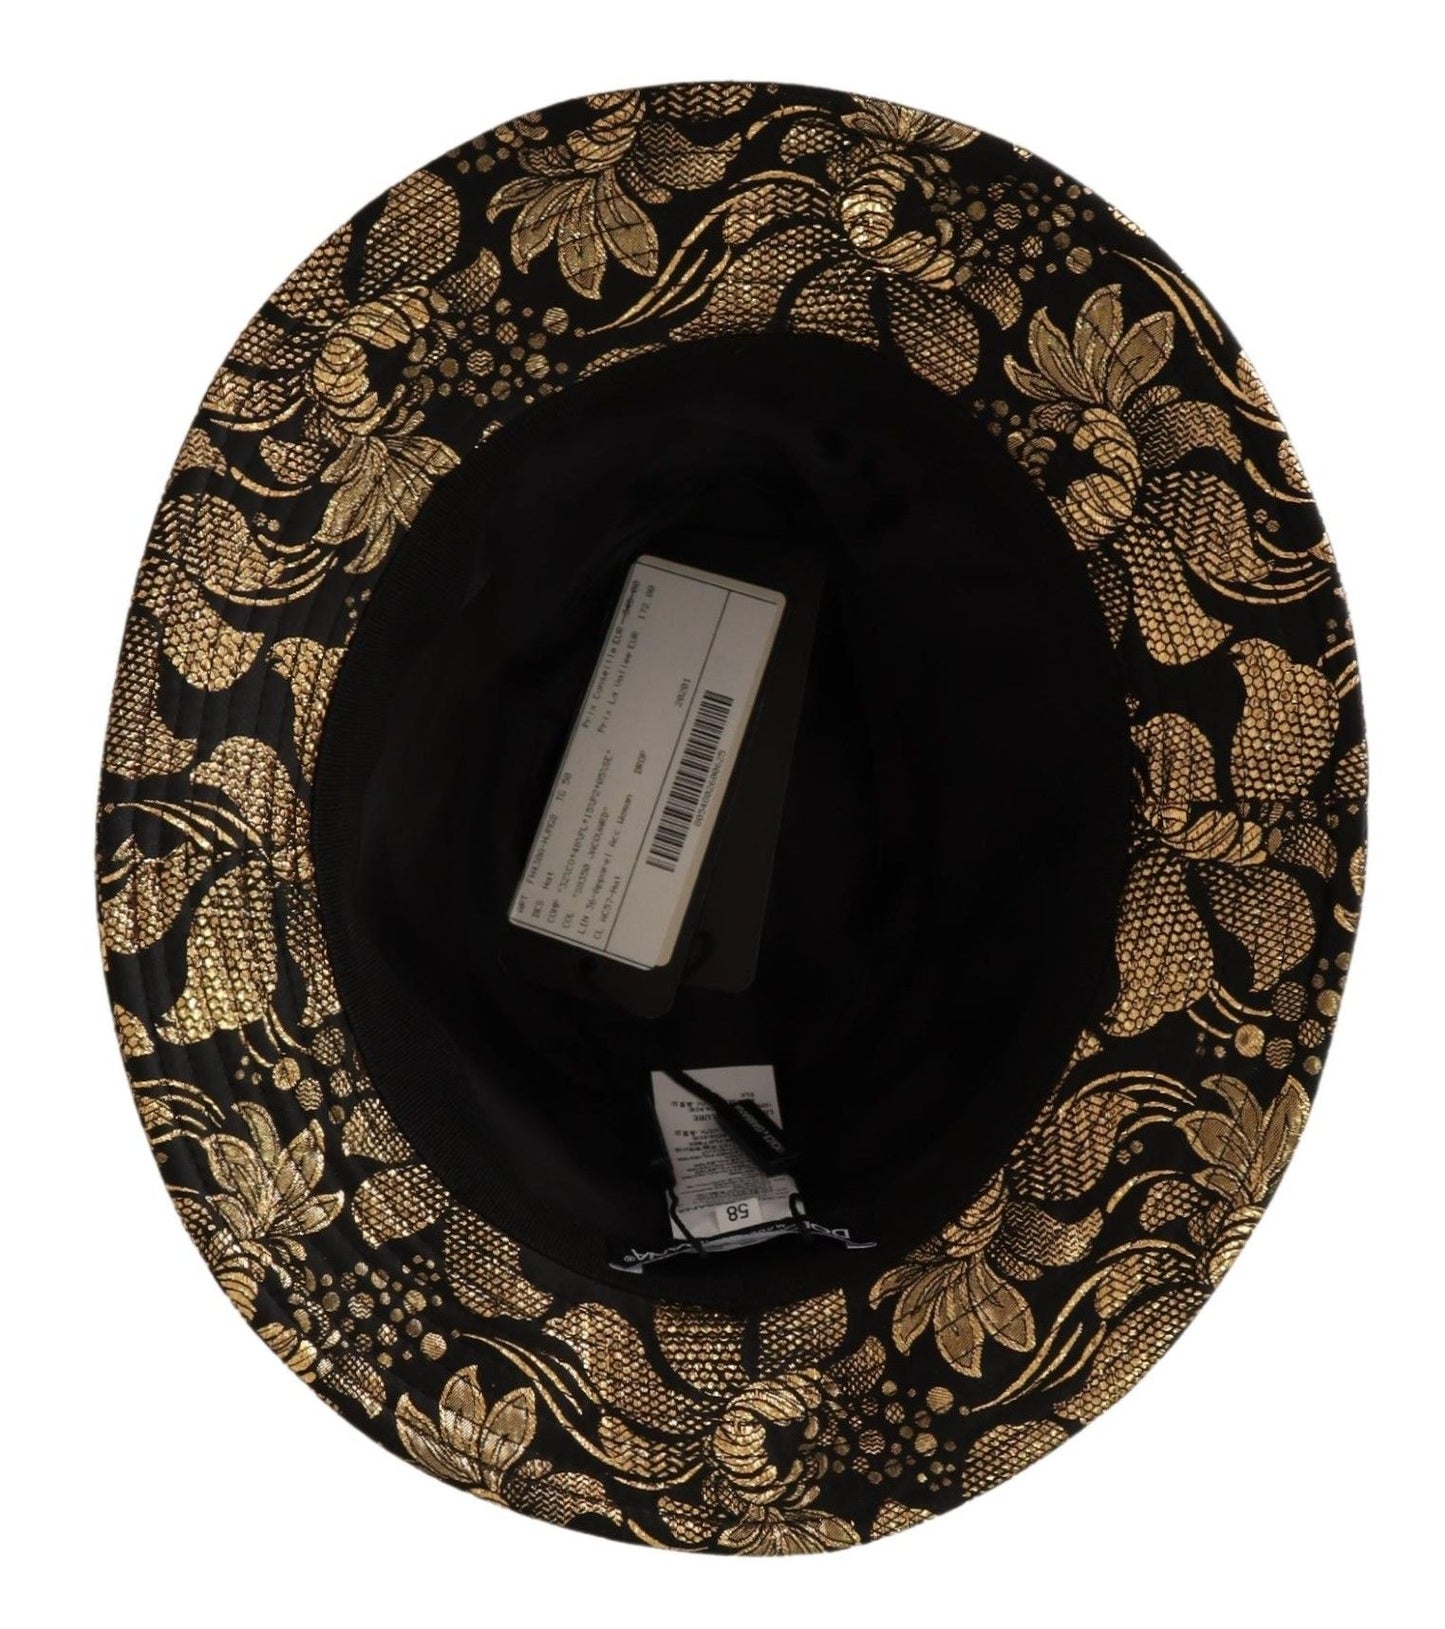 Elegant Gold-Threaded Black Bucket Hat